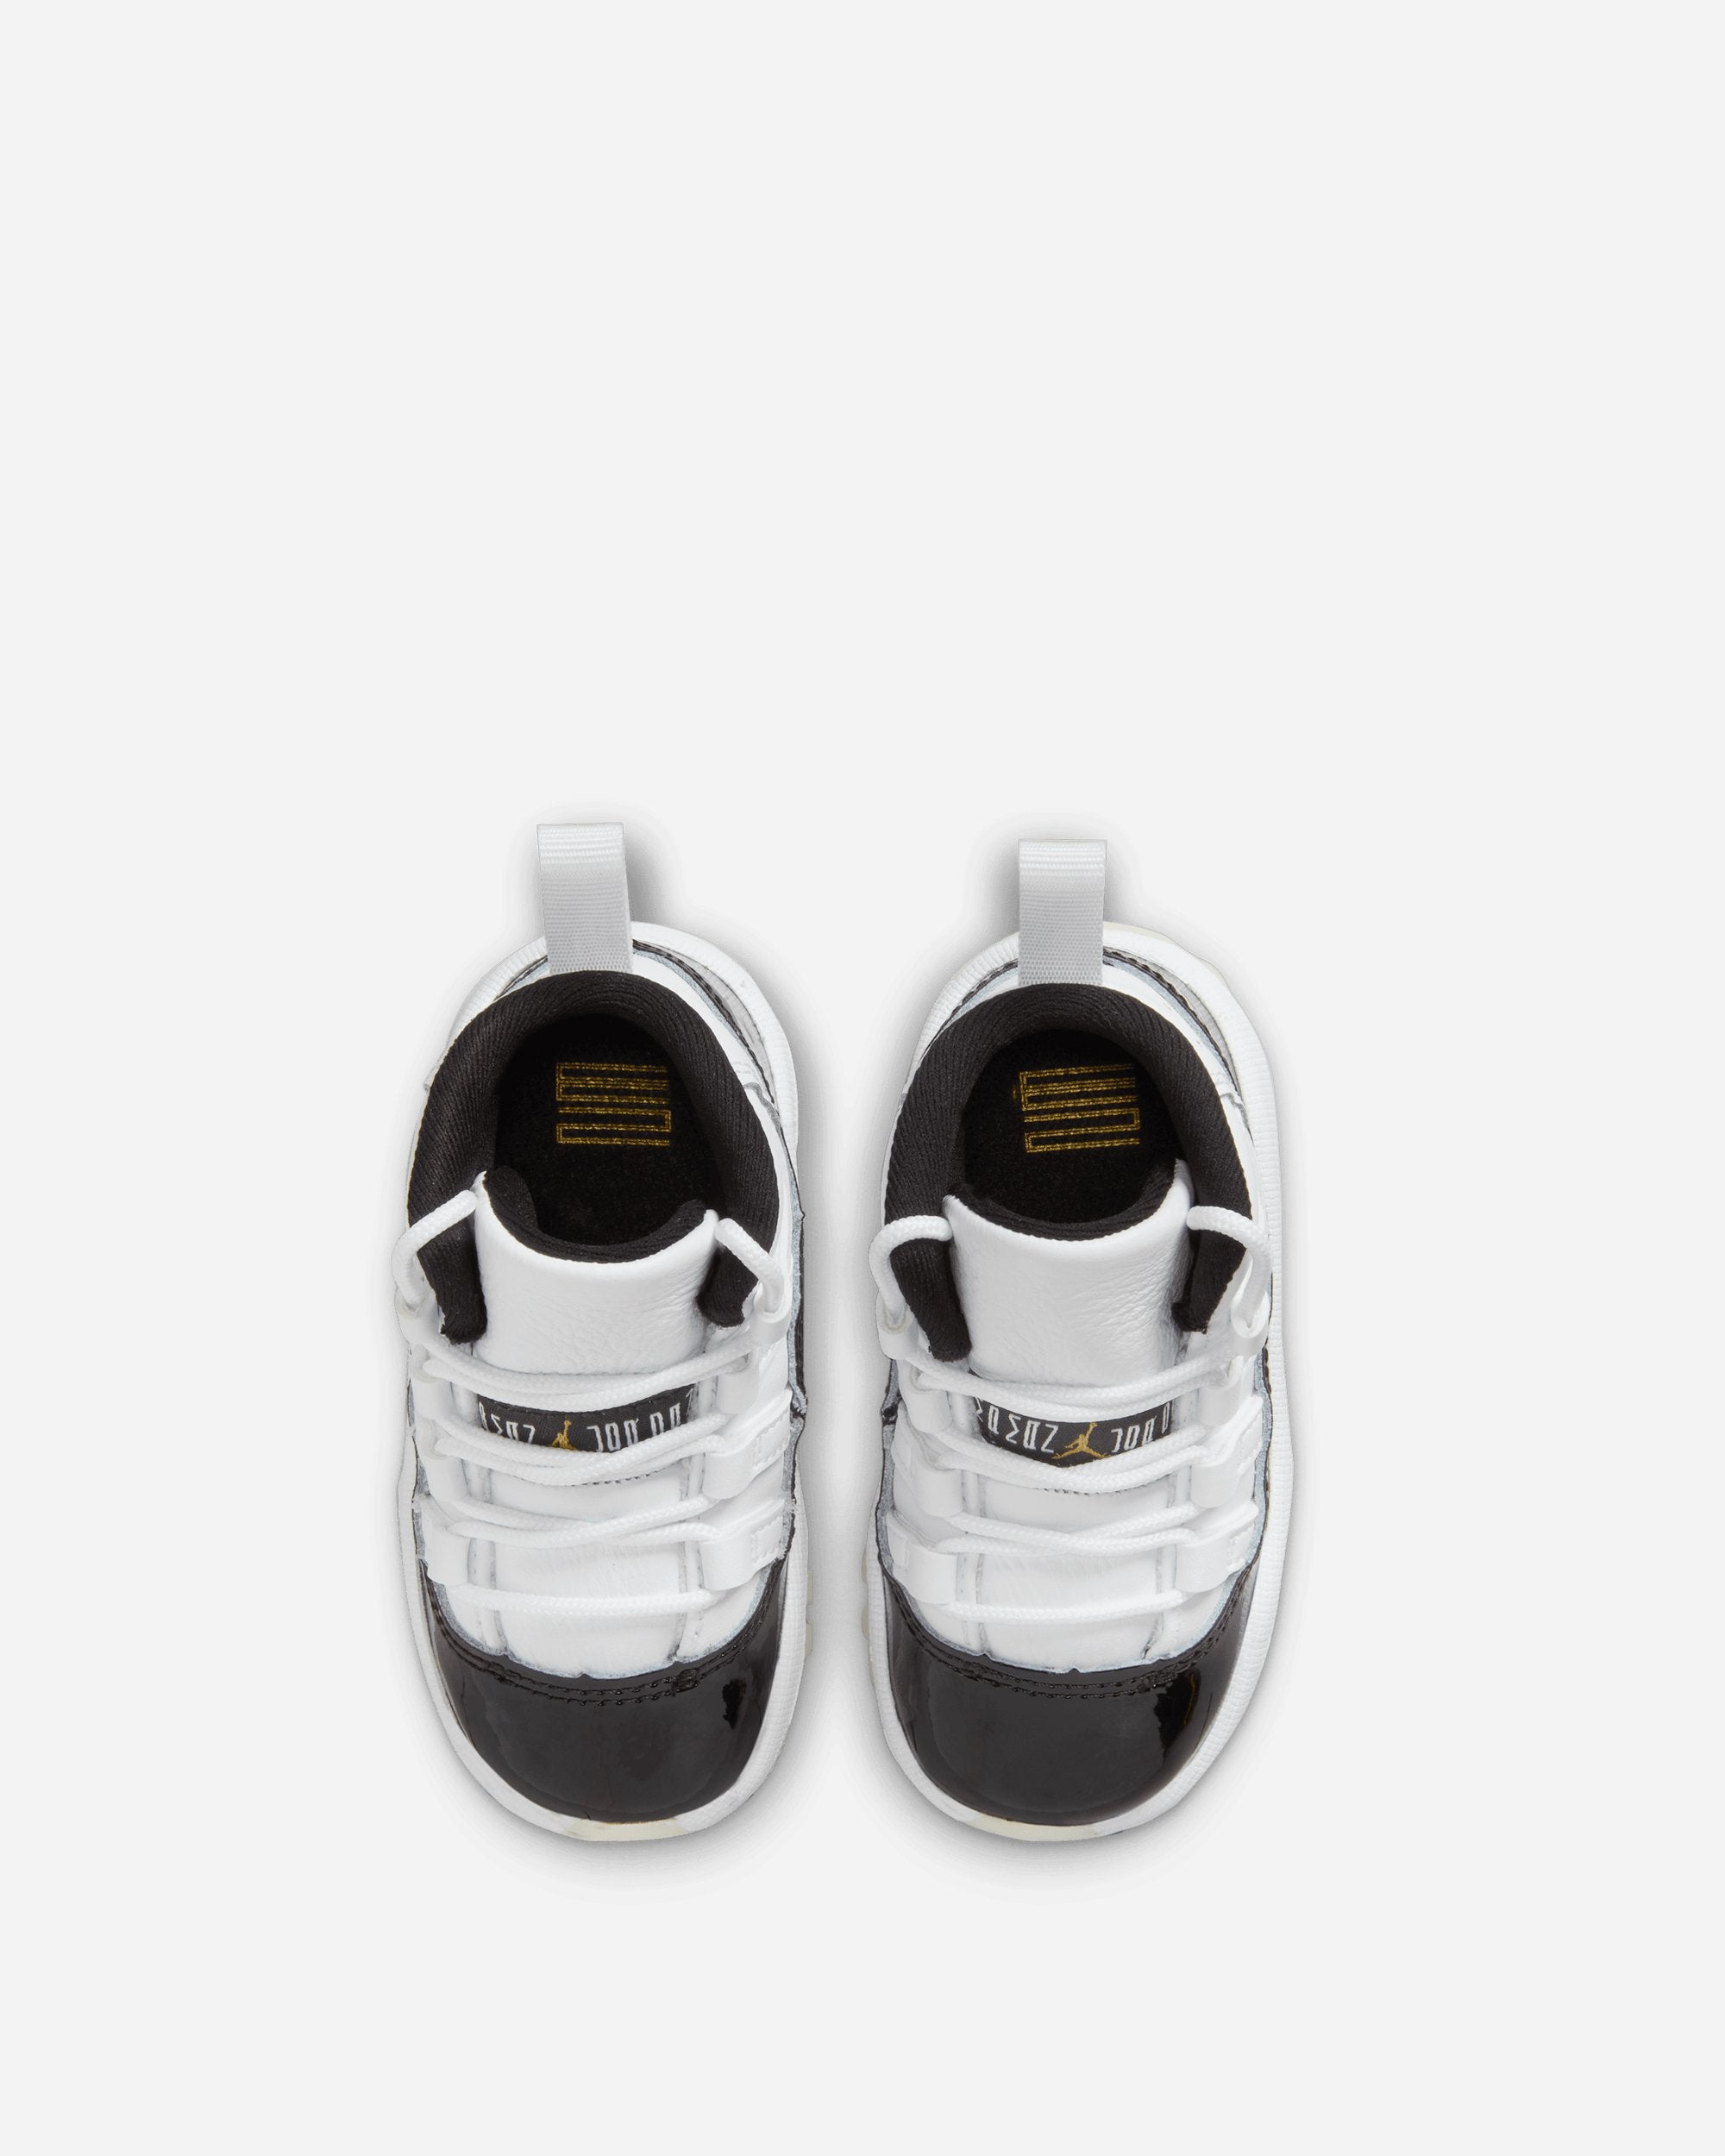 Jordan Brand Jordan 11 Retro 'DMP Gratitude' (Toddler) WHITE/METALLIC GOLD-BLACK 378040-170